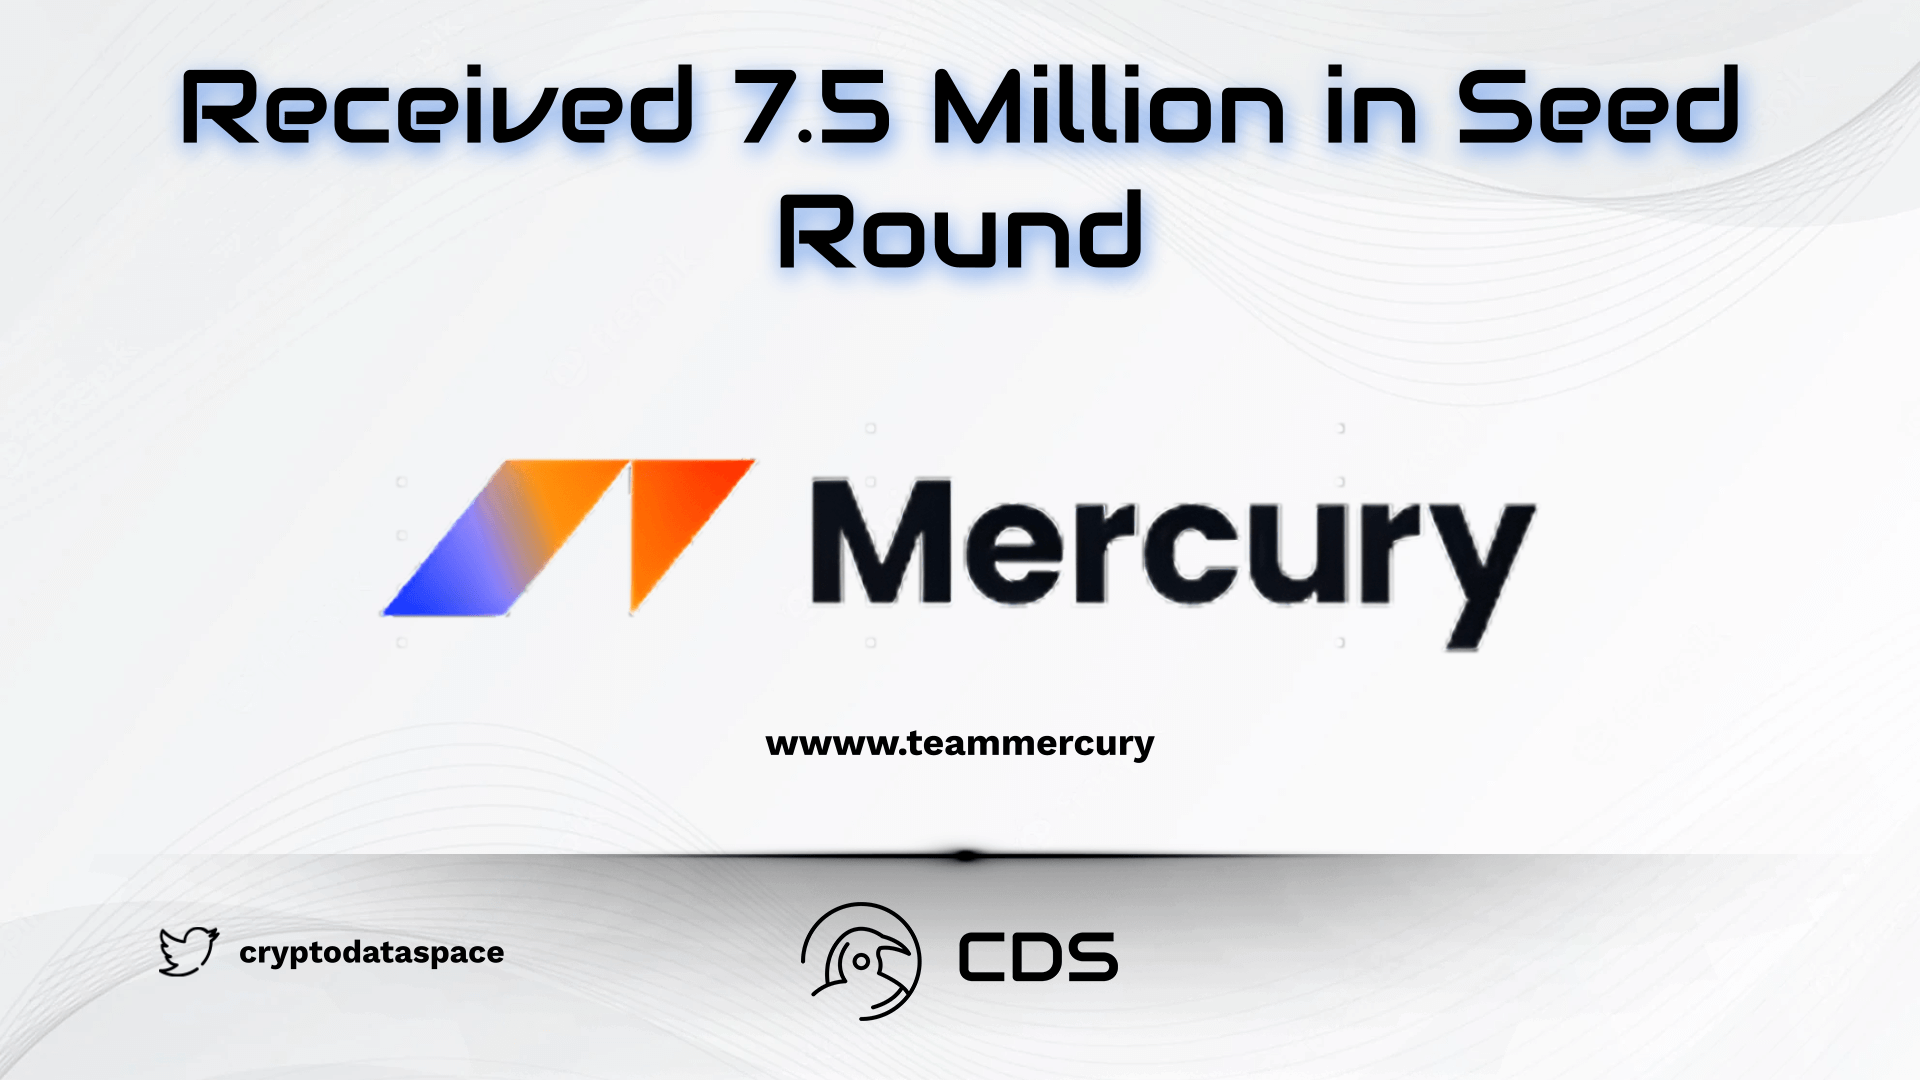 mercury received 7.5million